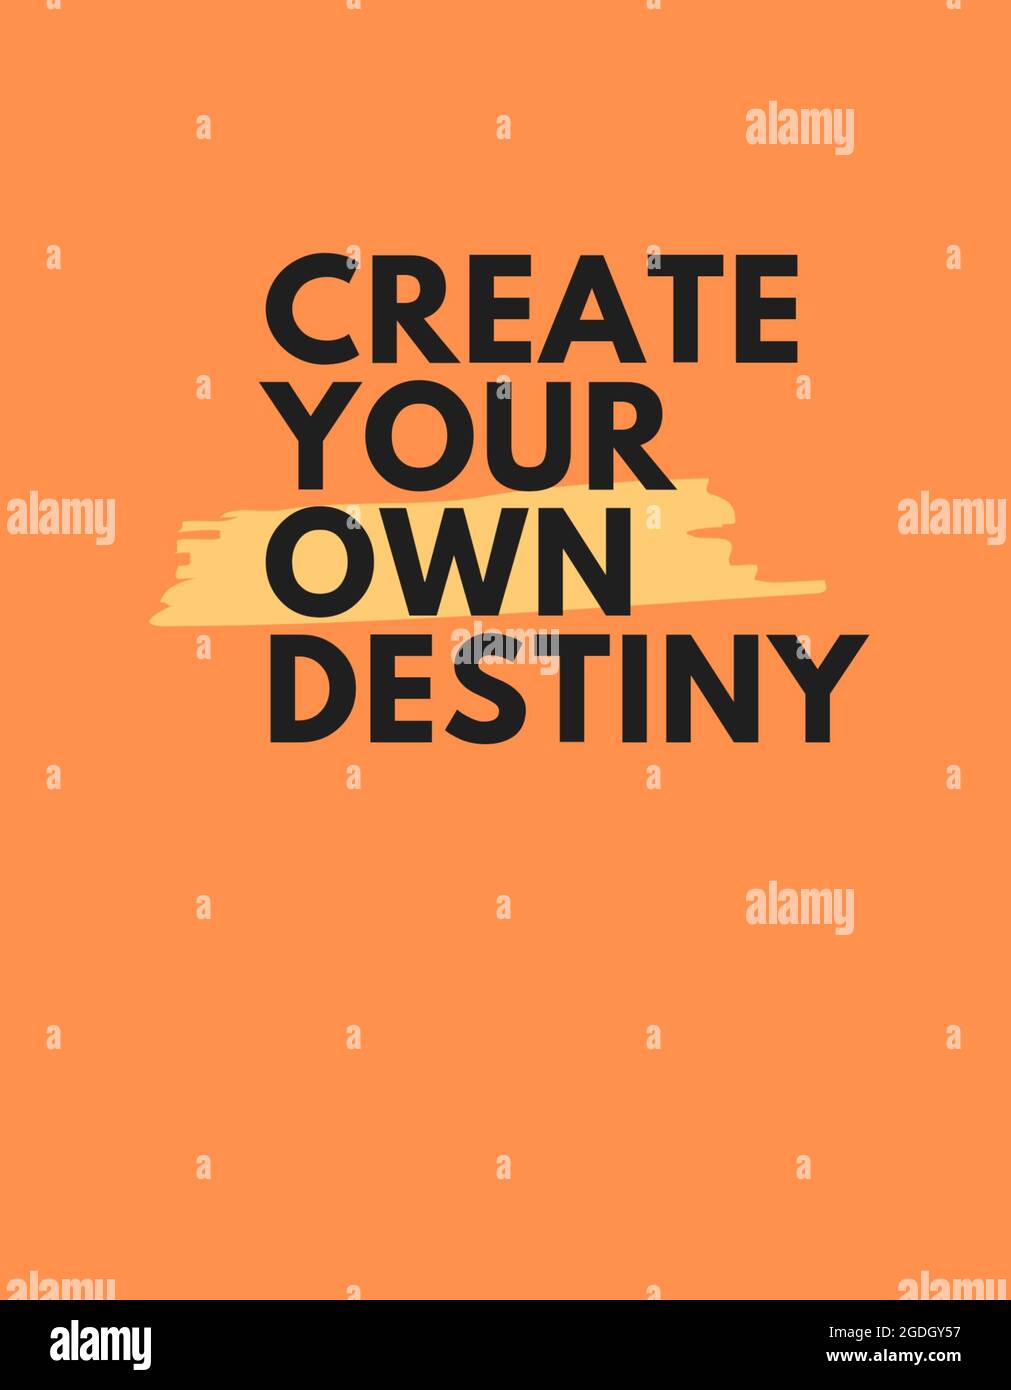 Create your own destiny  design Stock Photo